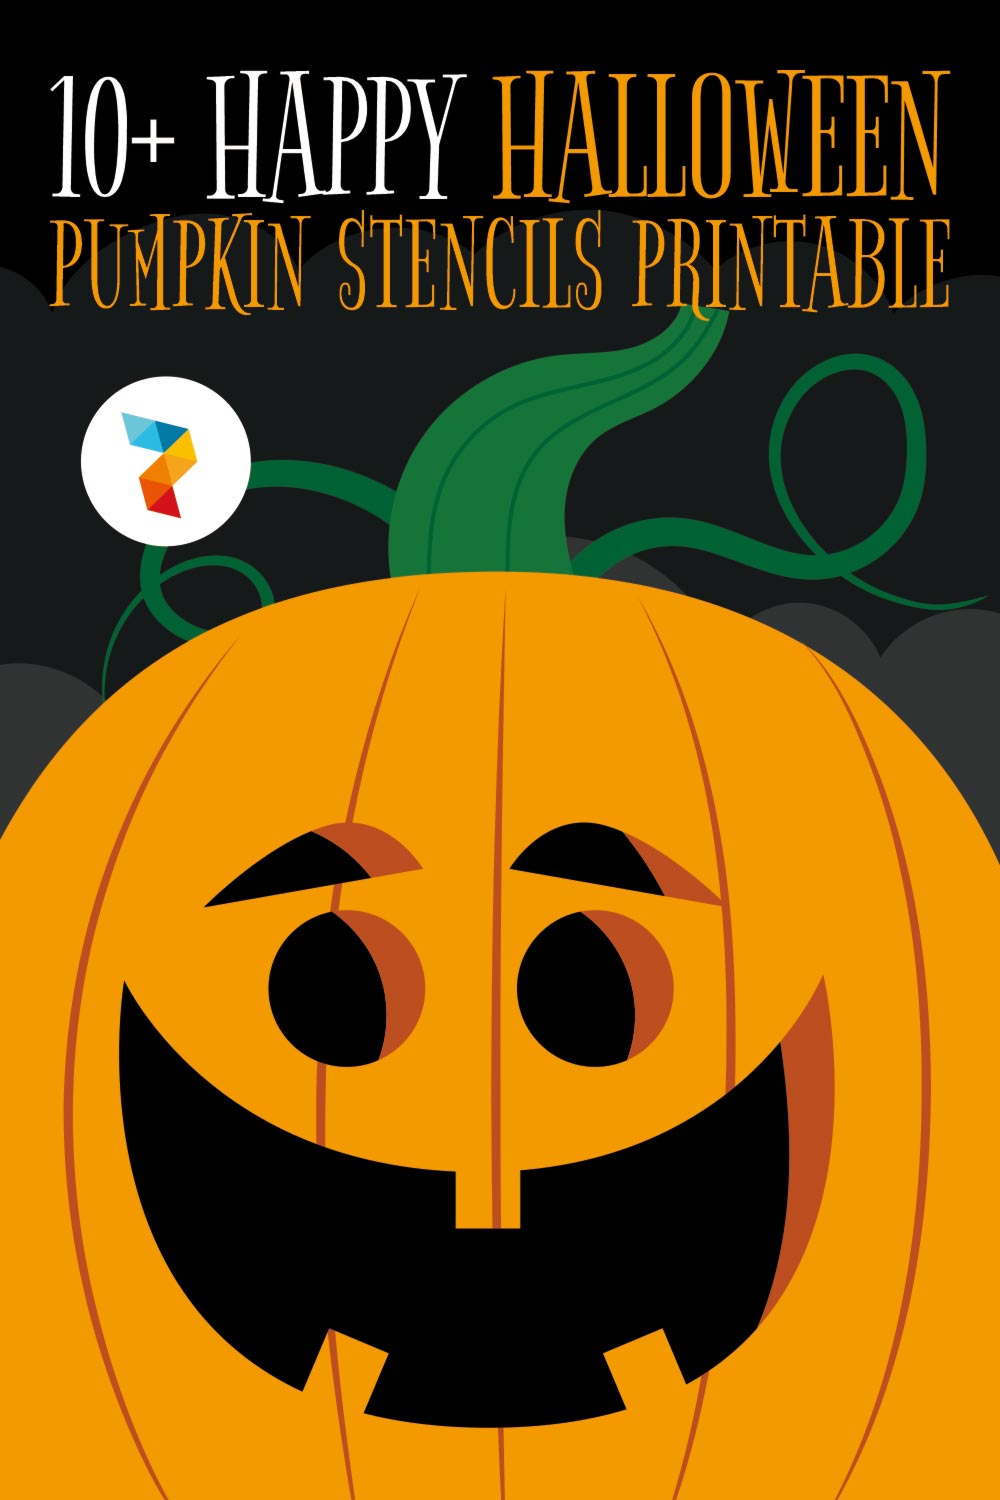 Happy Halloween Pumpkin Stencils Printable